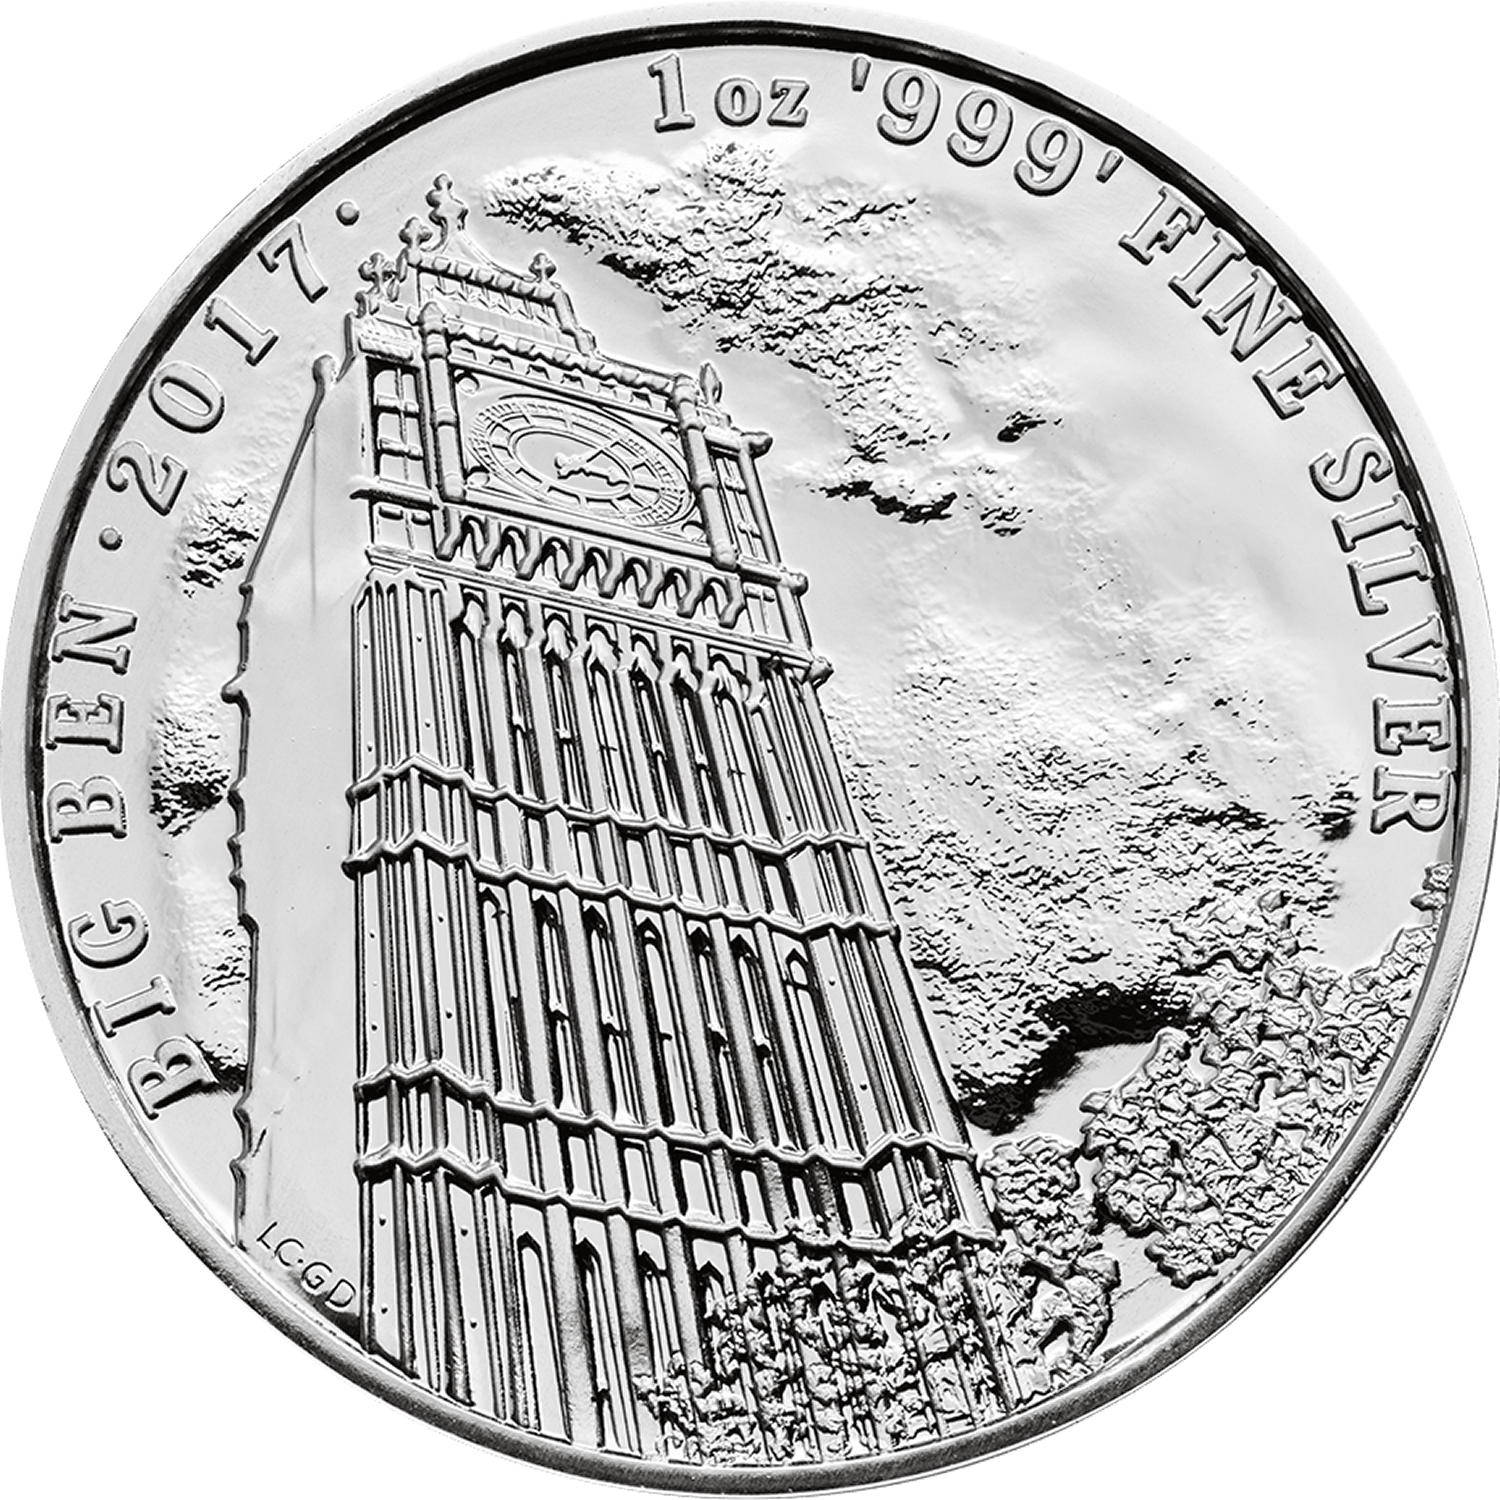 Details about   2017 Great Britain UK Royal Mint 1 oz Fine Silver Landmarks Series #1 Big Ben BU 